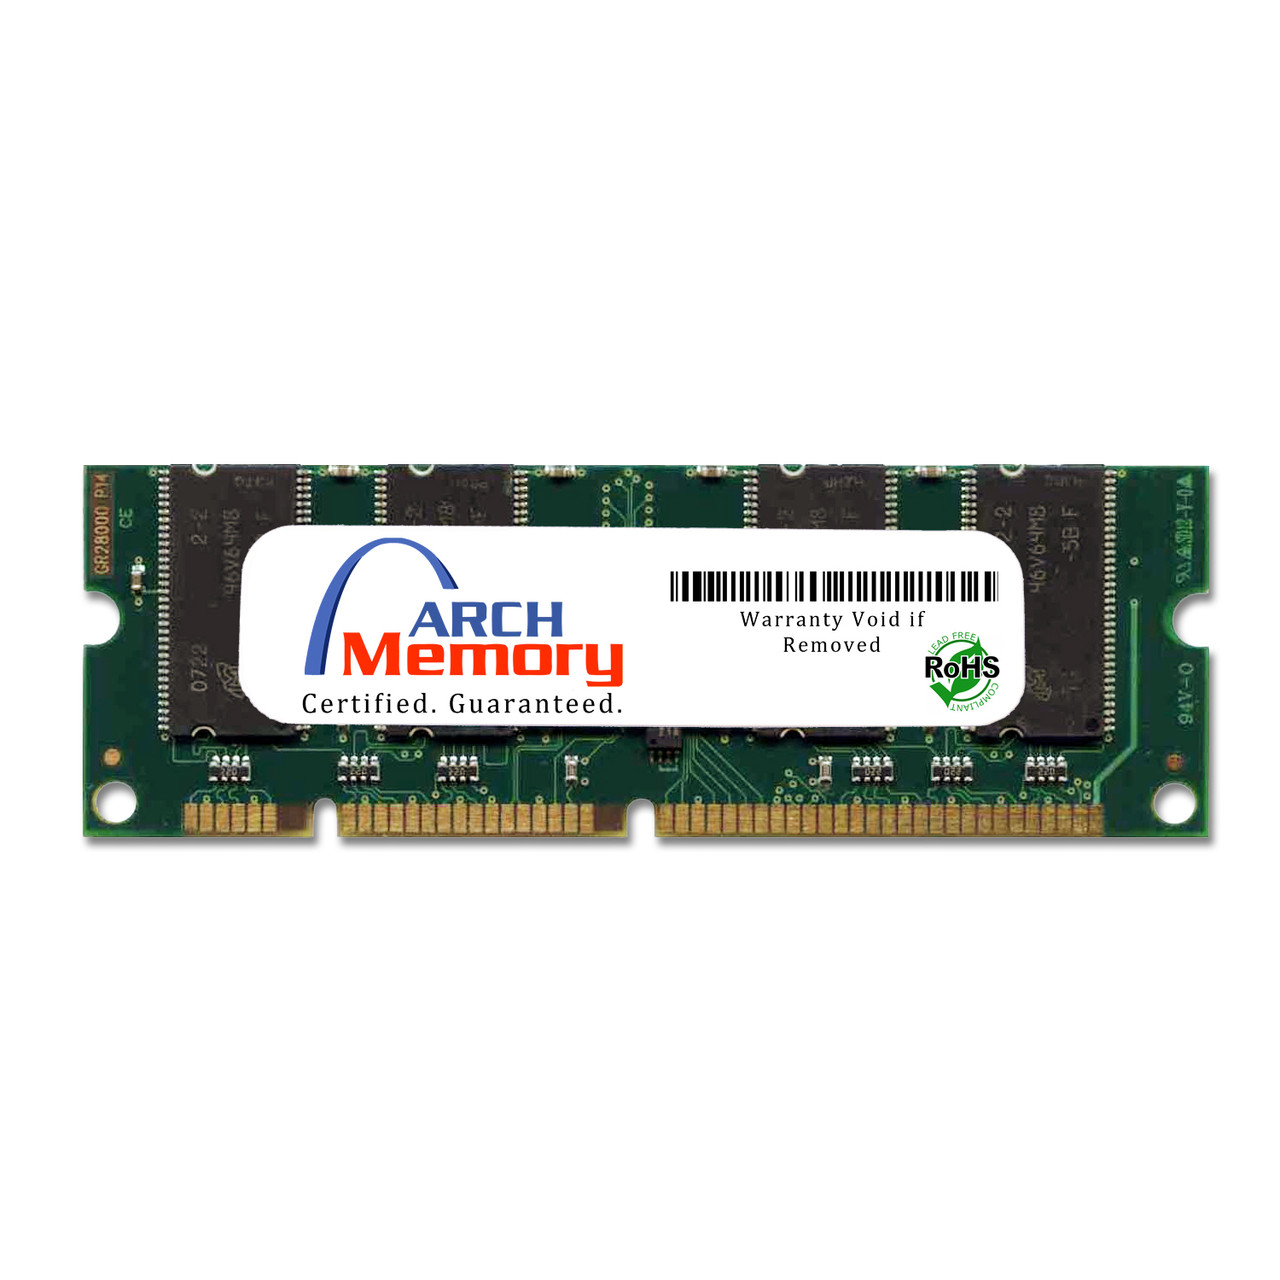 eBay*256MB 100-Pin DDR HP Printers (Q2627A)